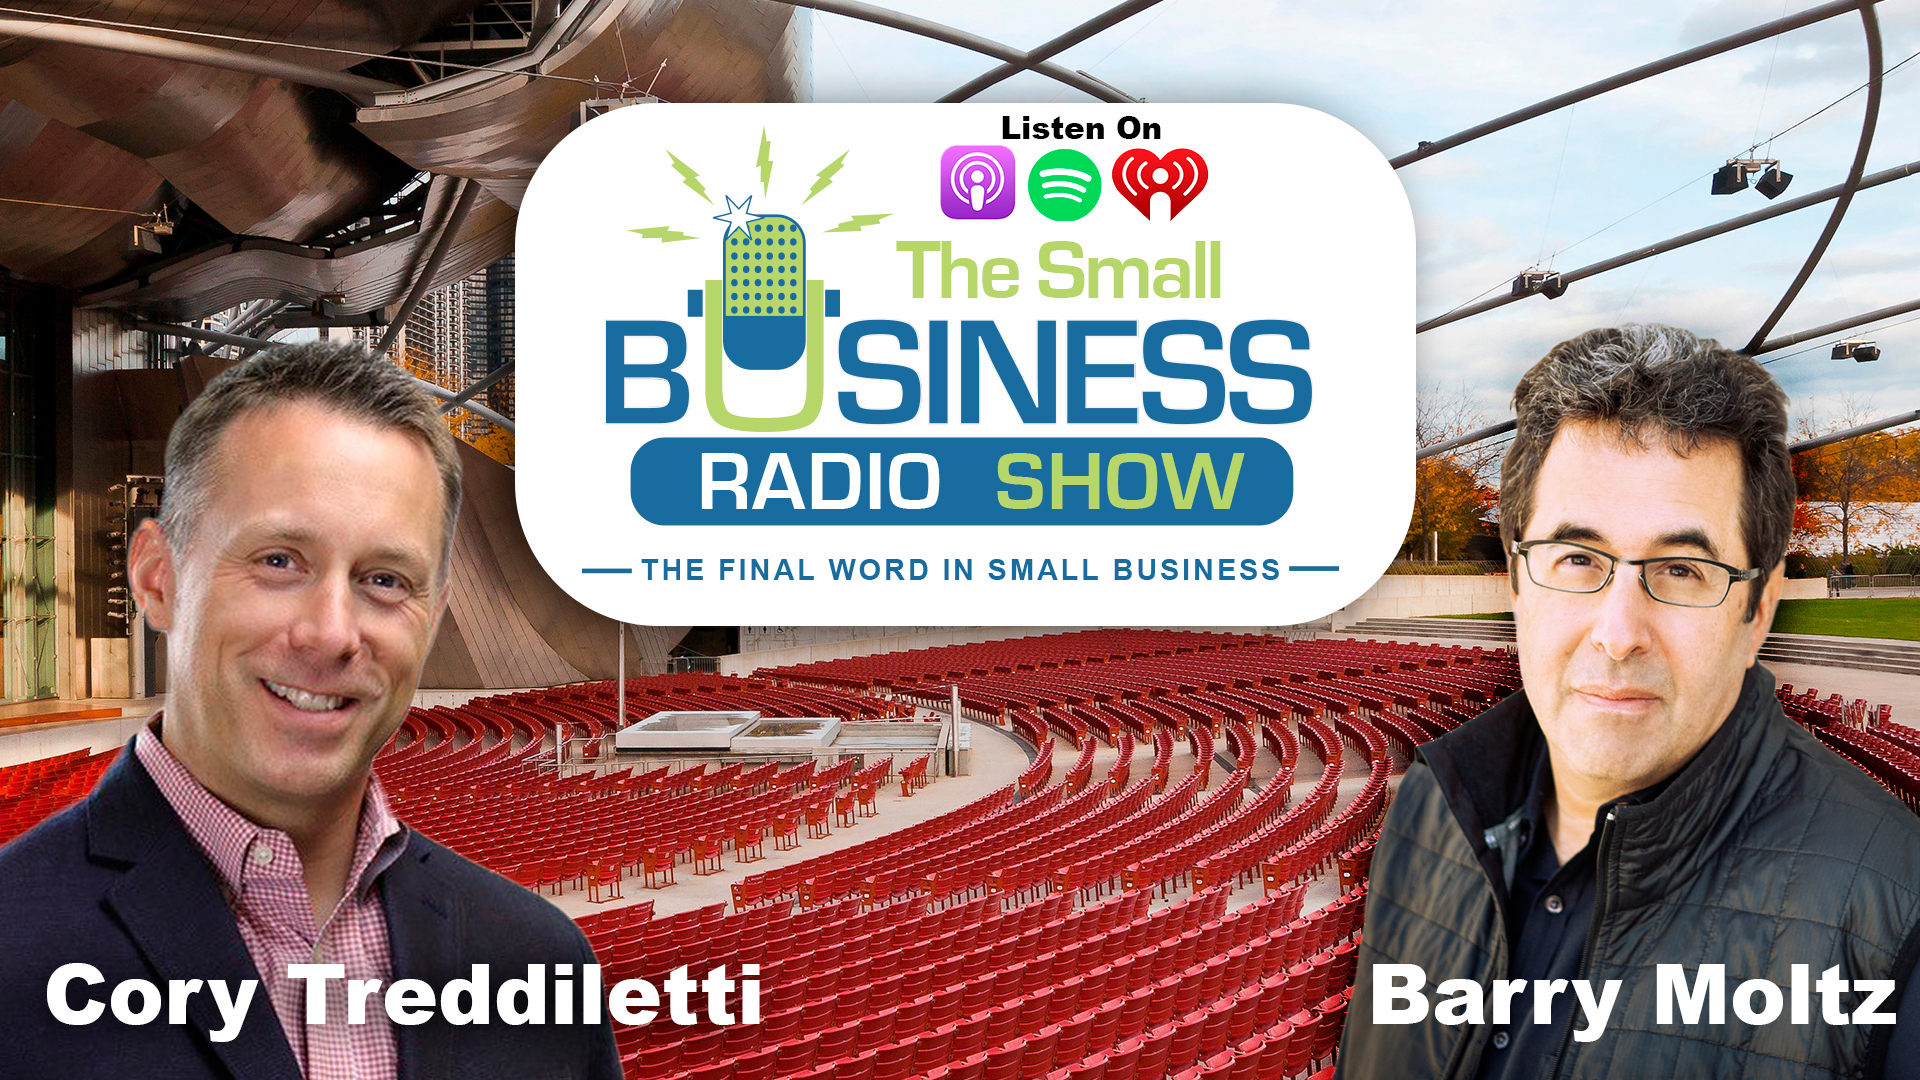 Cory Treddiletti on The Small Business Radio Show